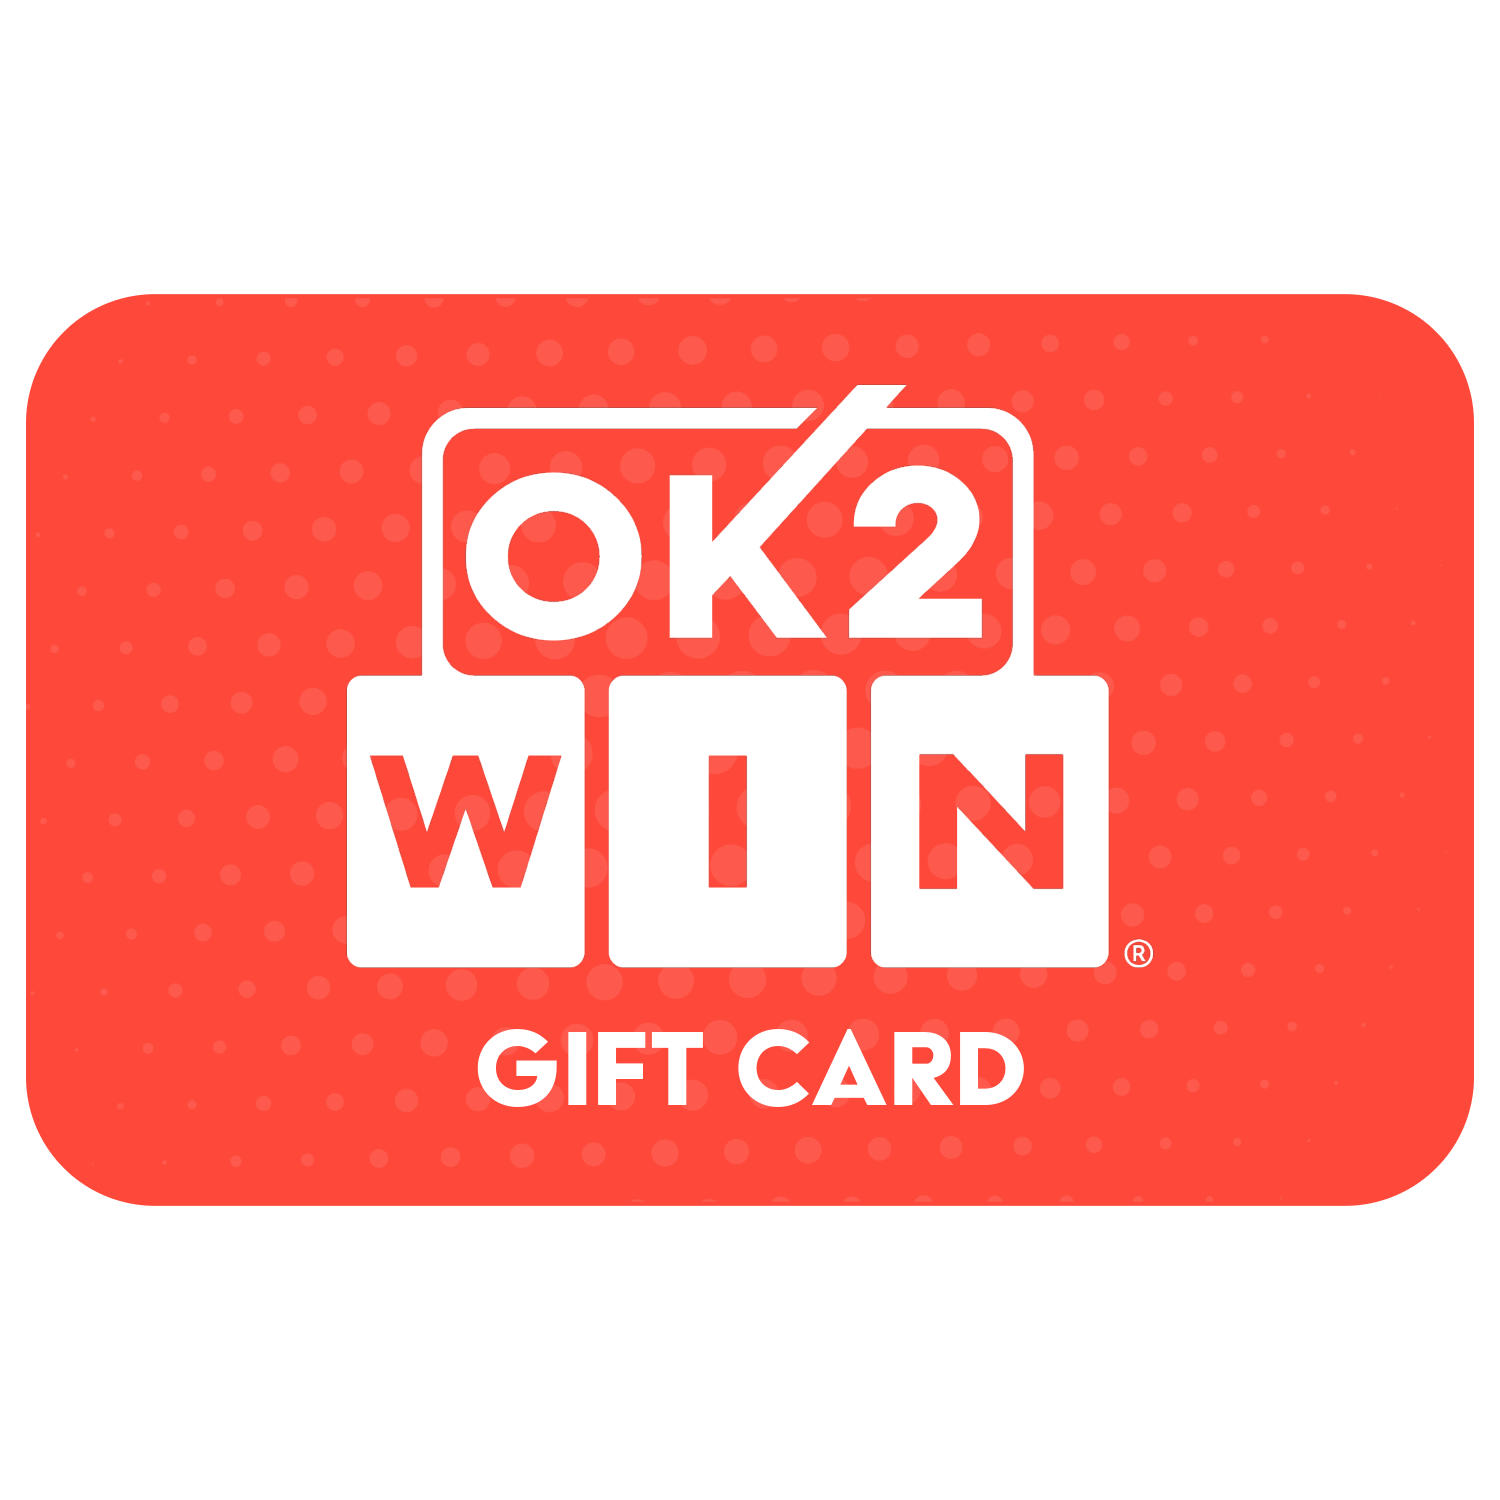 ok2win gift card